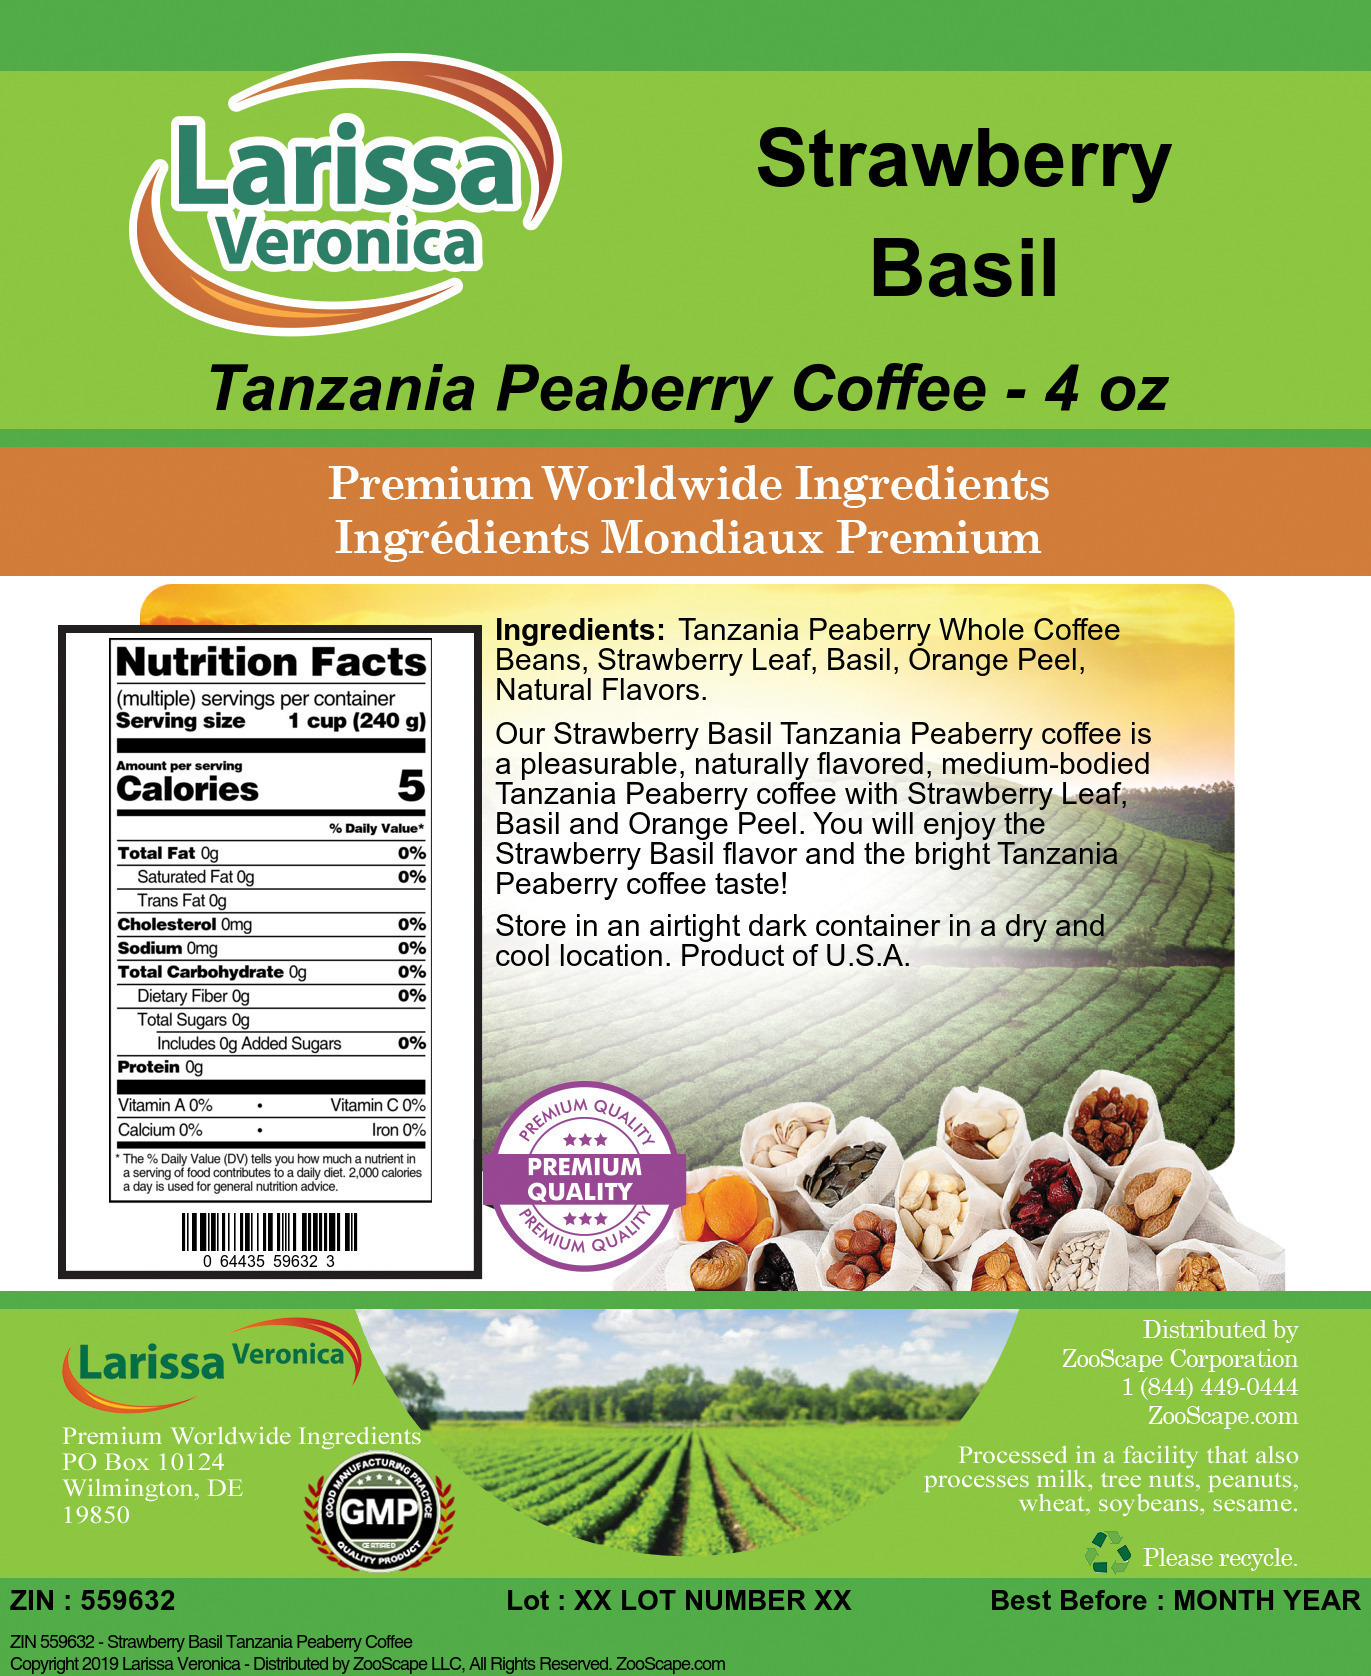 Strawberry Basil Tanzania Peaberry Coffee - Label